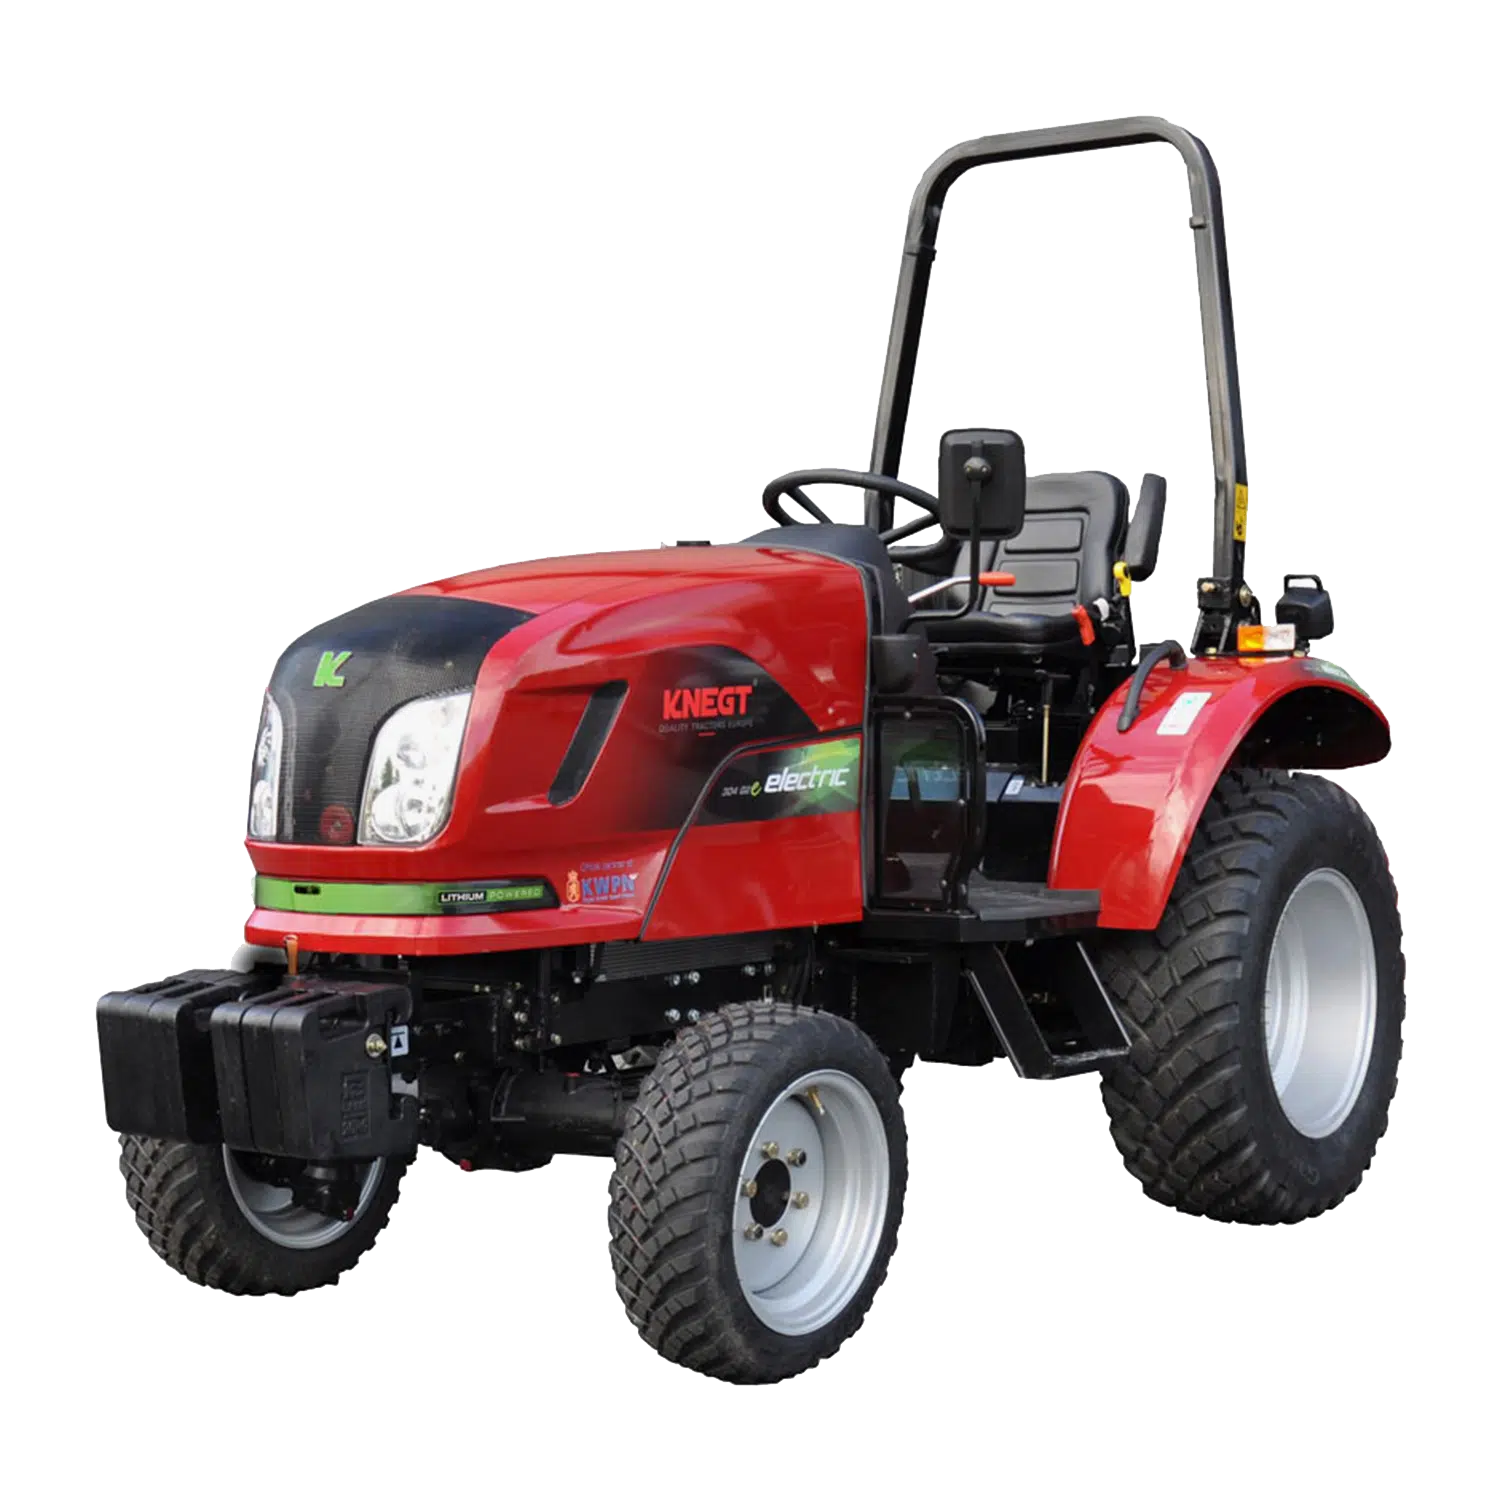 Knegt 304 G2 Elektrische Compact Tractor